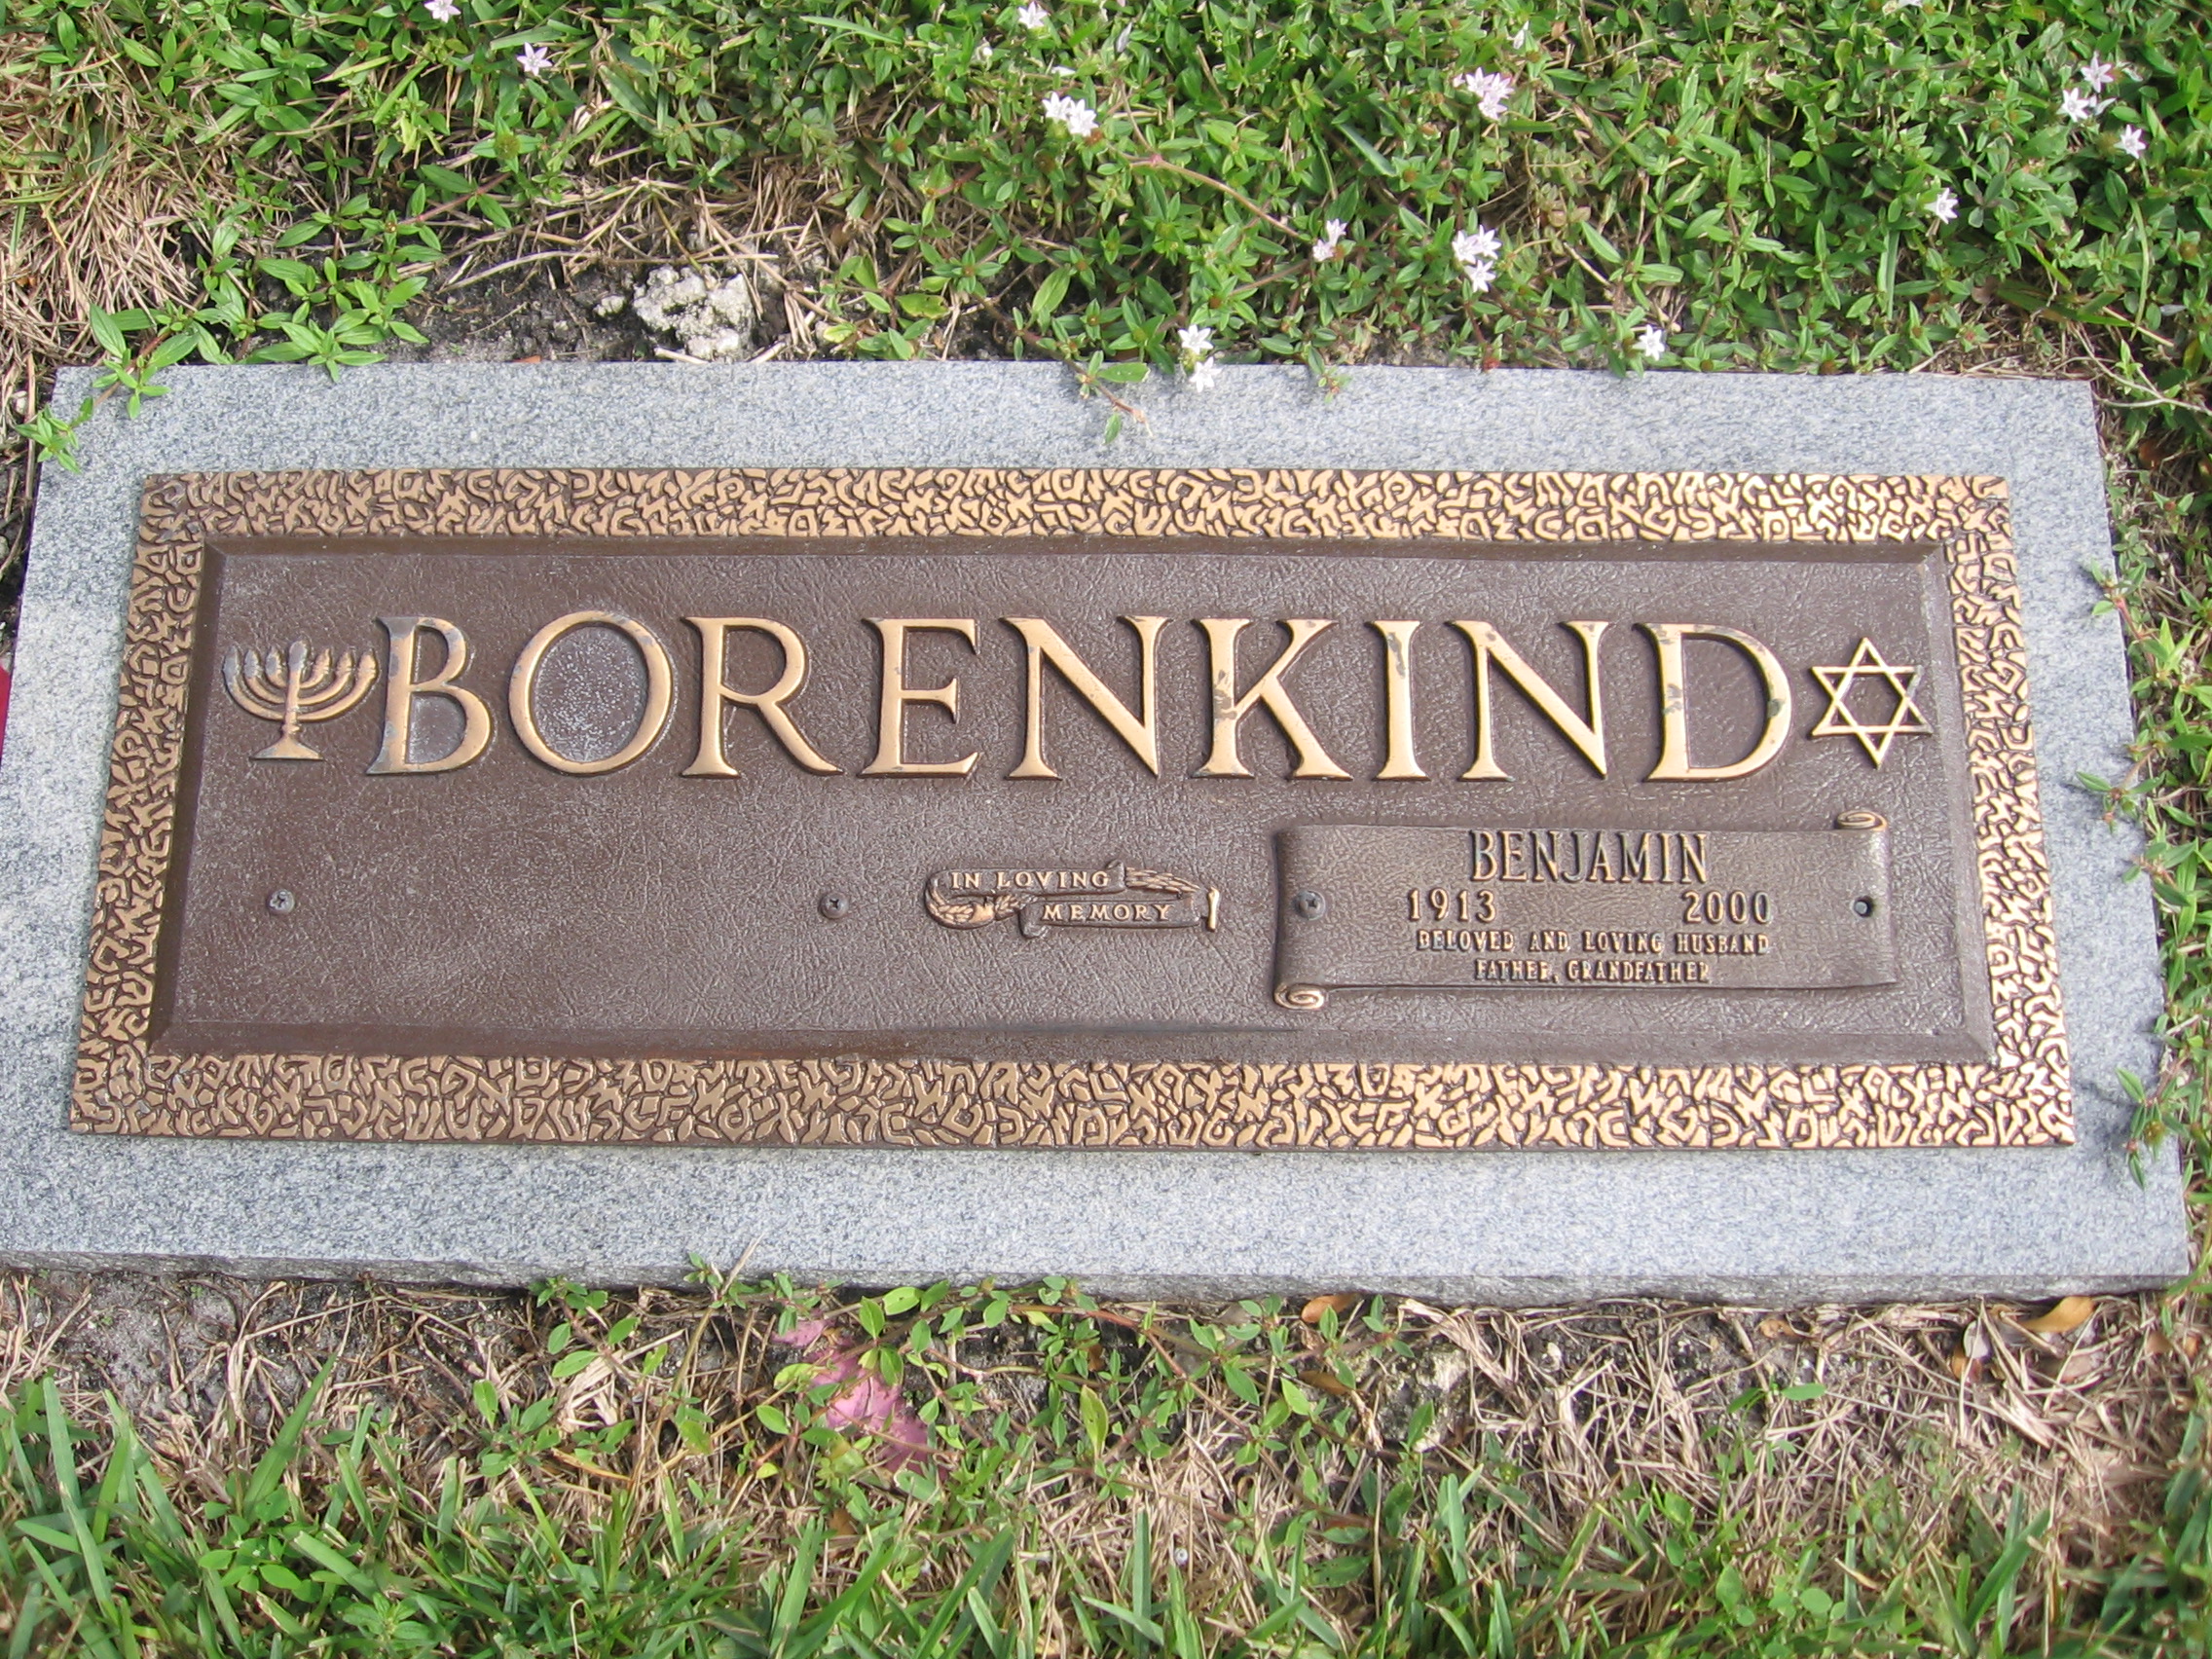 Benjamin Borenkind